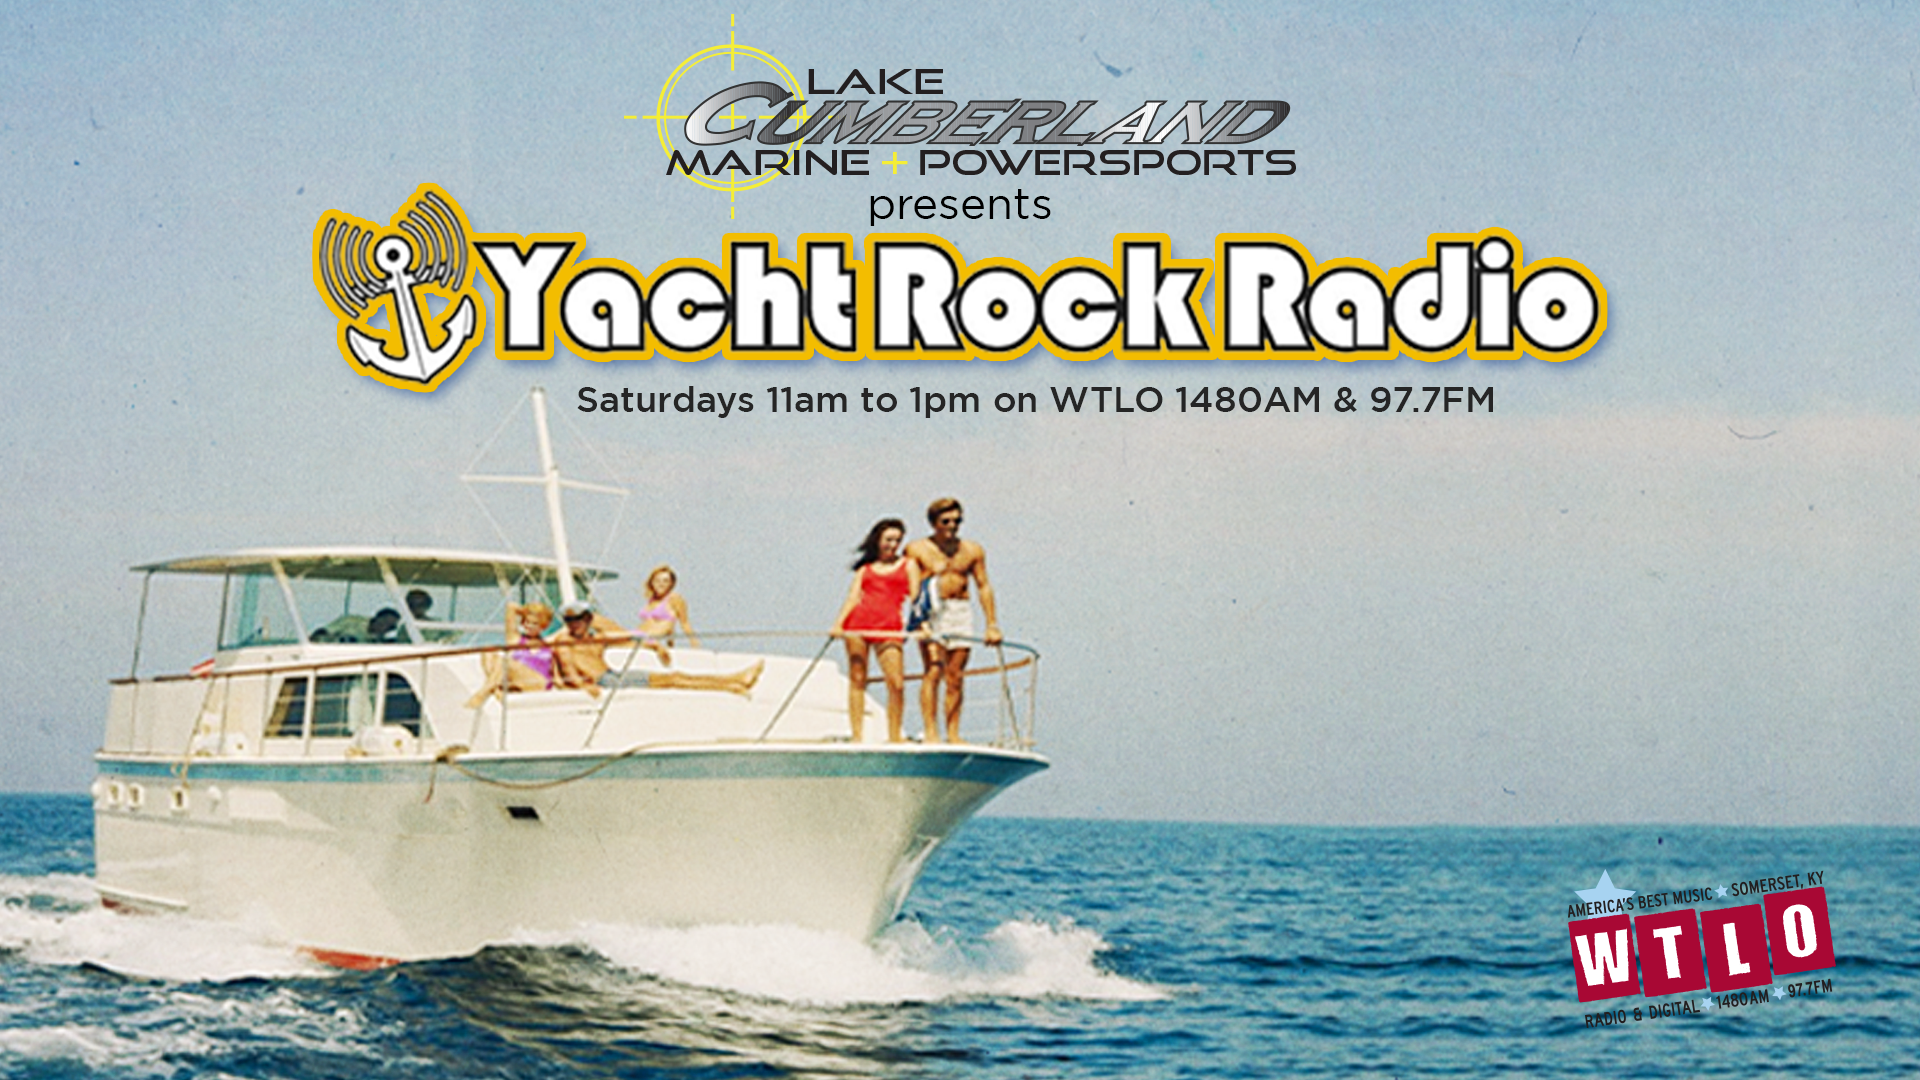 Yacht Rock Returns